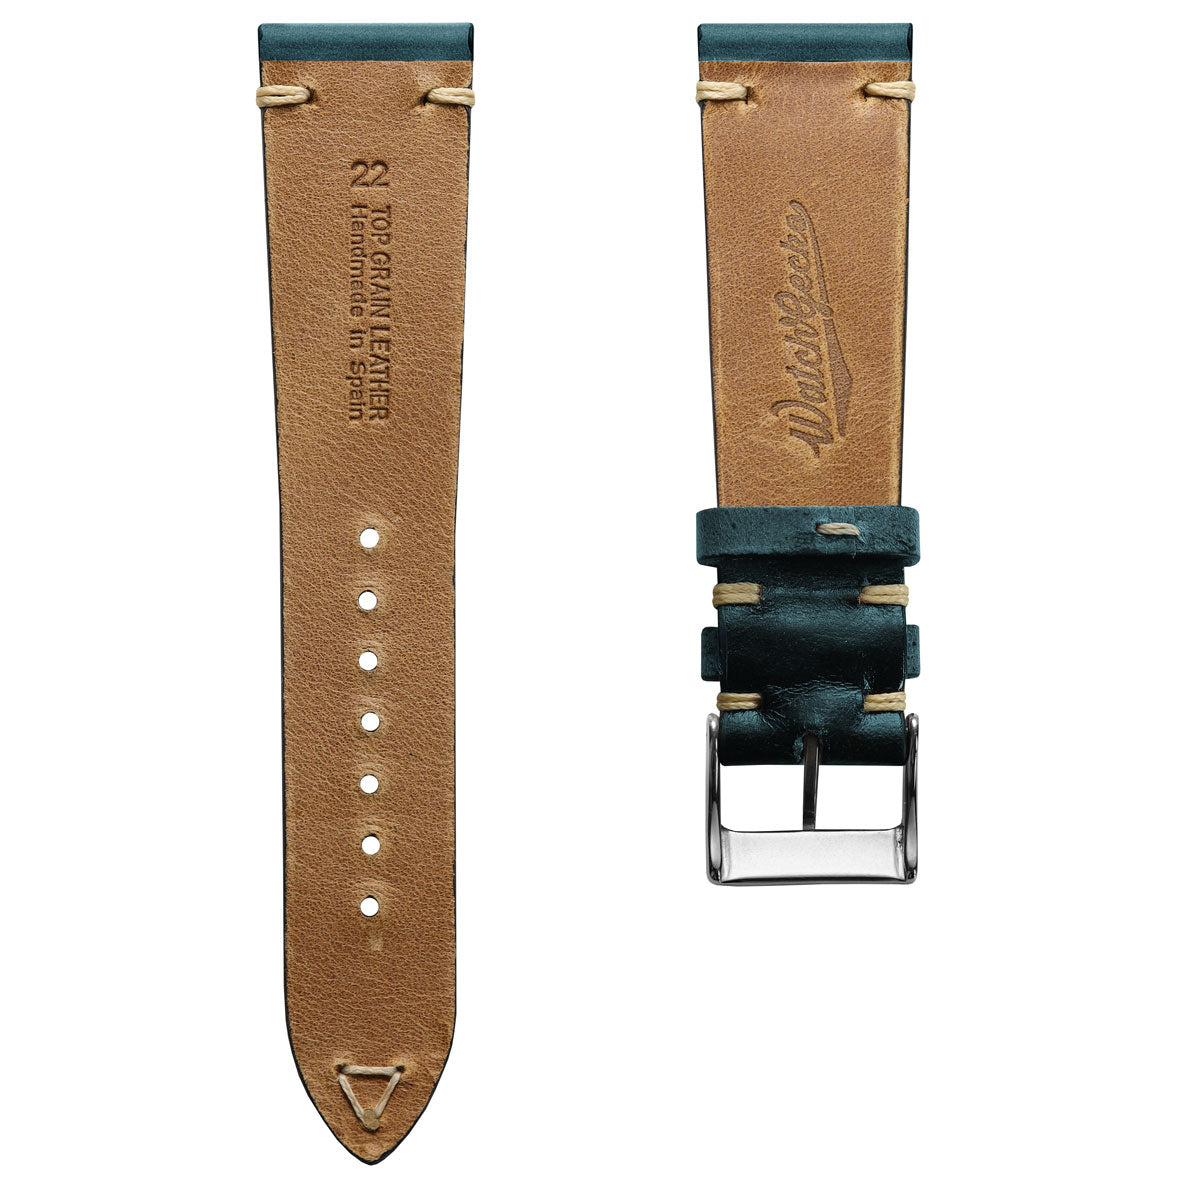 Radstock Vintage V-stitch Genuine Leather Watch Strap - Turquoise